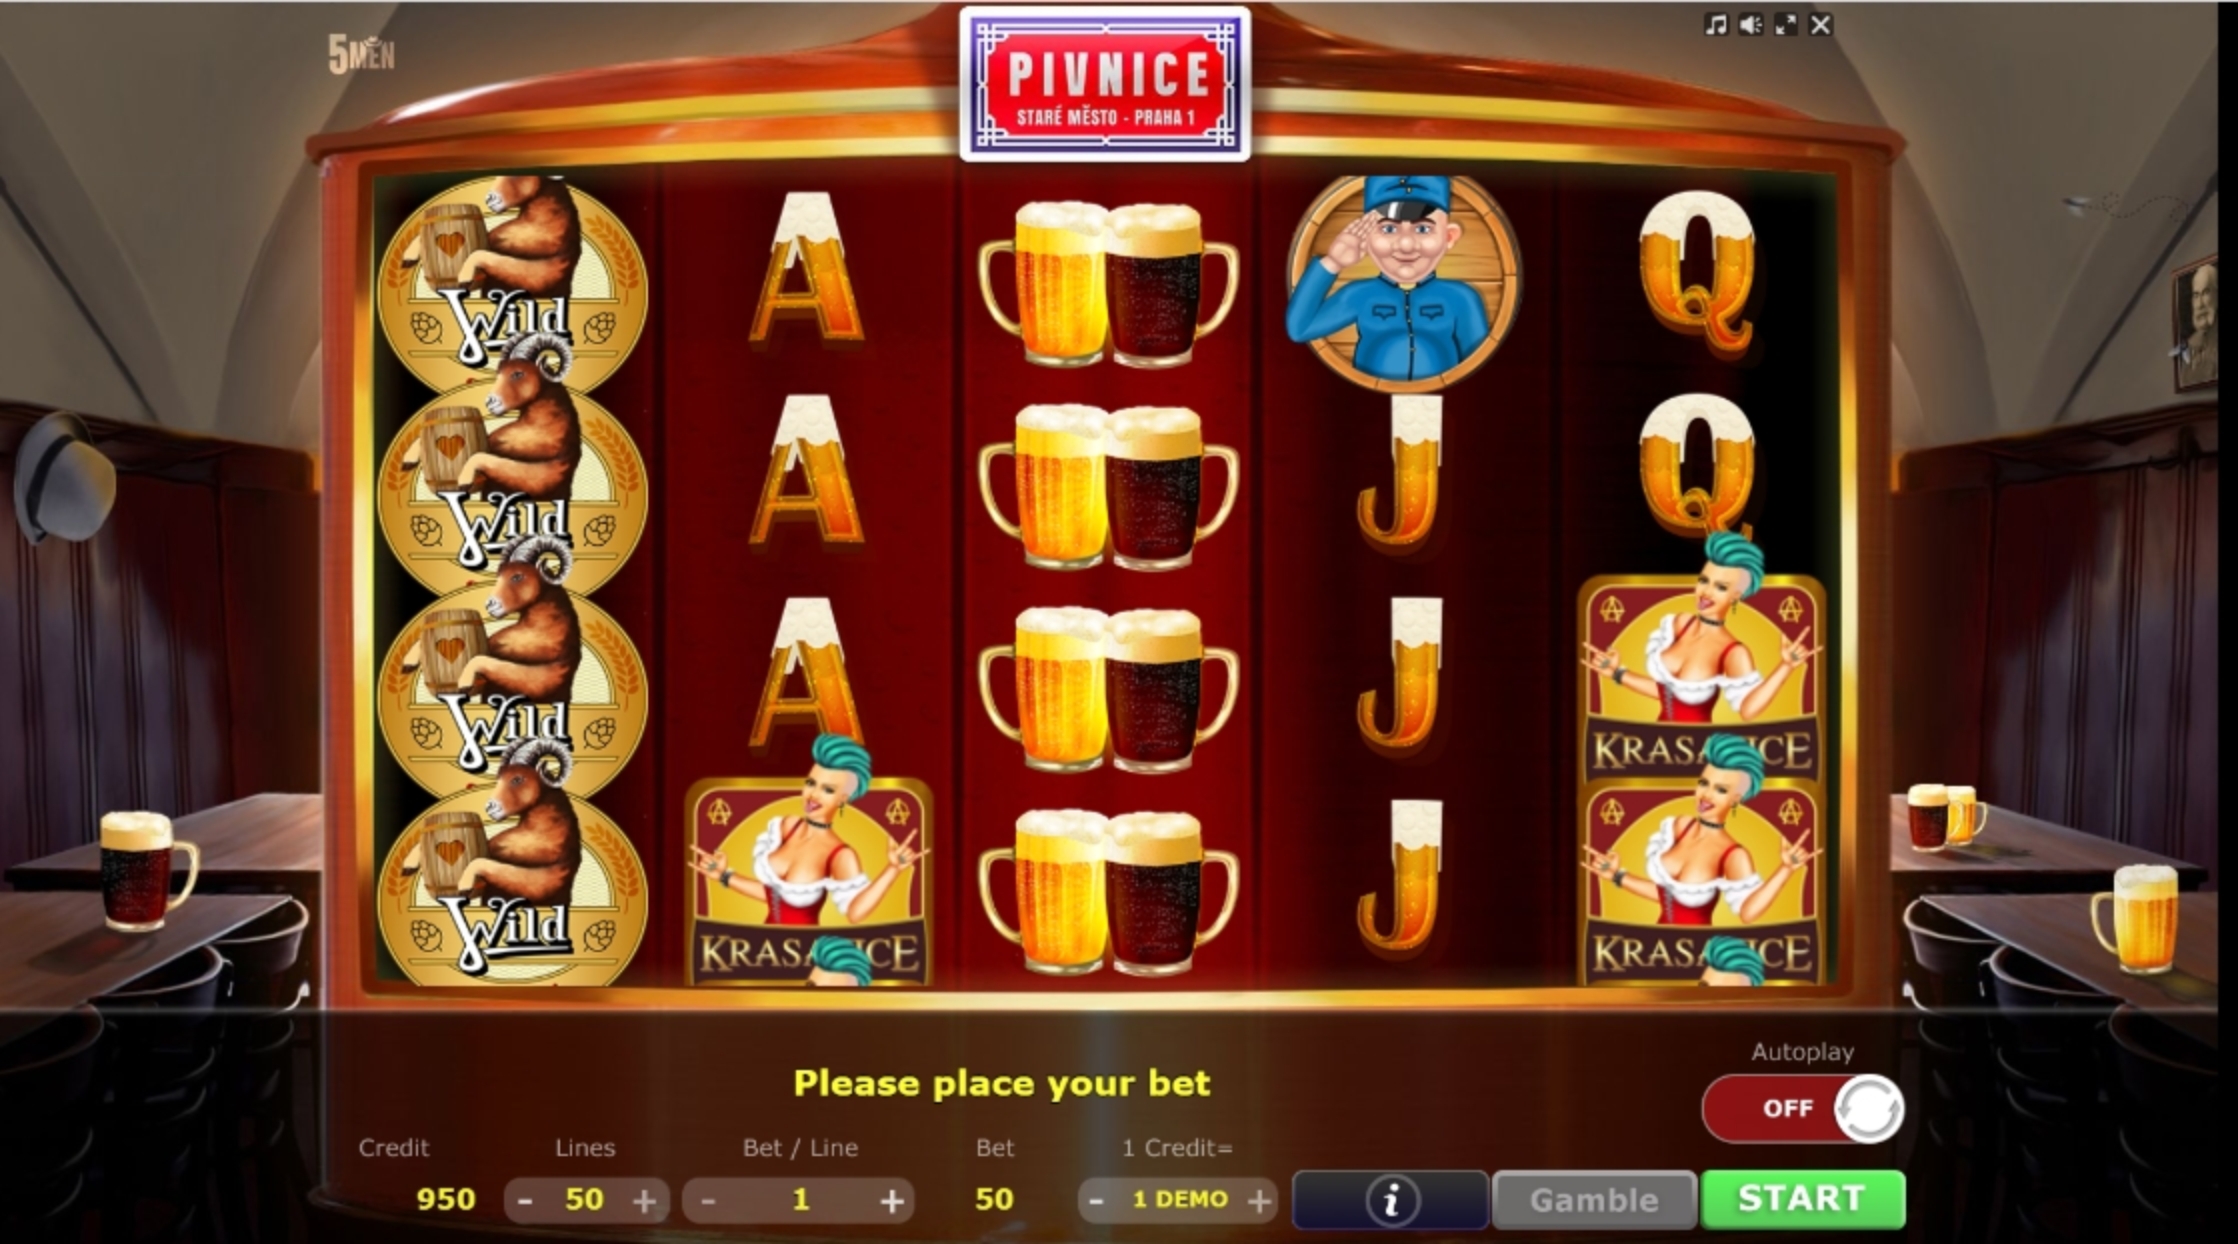 Reels in Pivnice Slot Game by Five Men Games